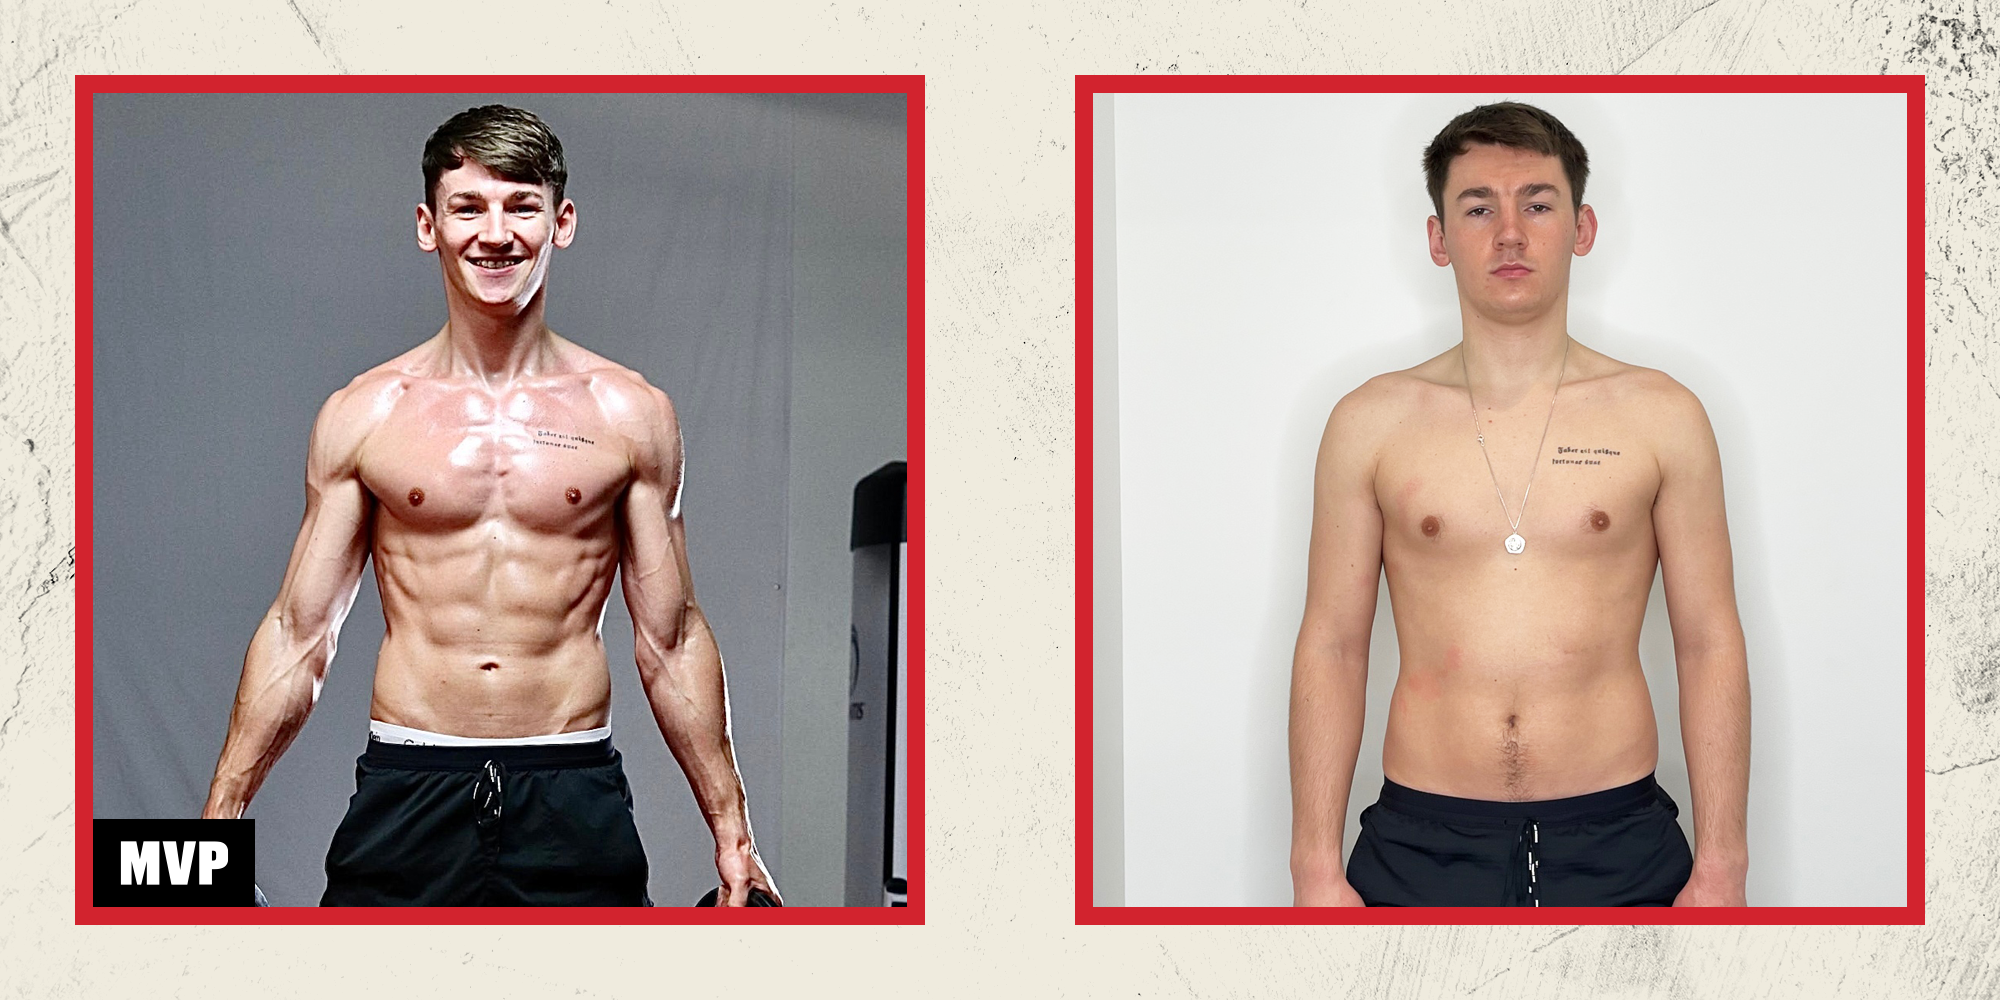 Body Transformation - He looks a lot healthier! Isn't he?!